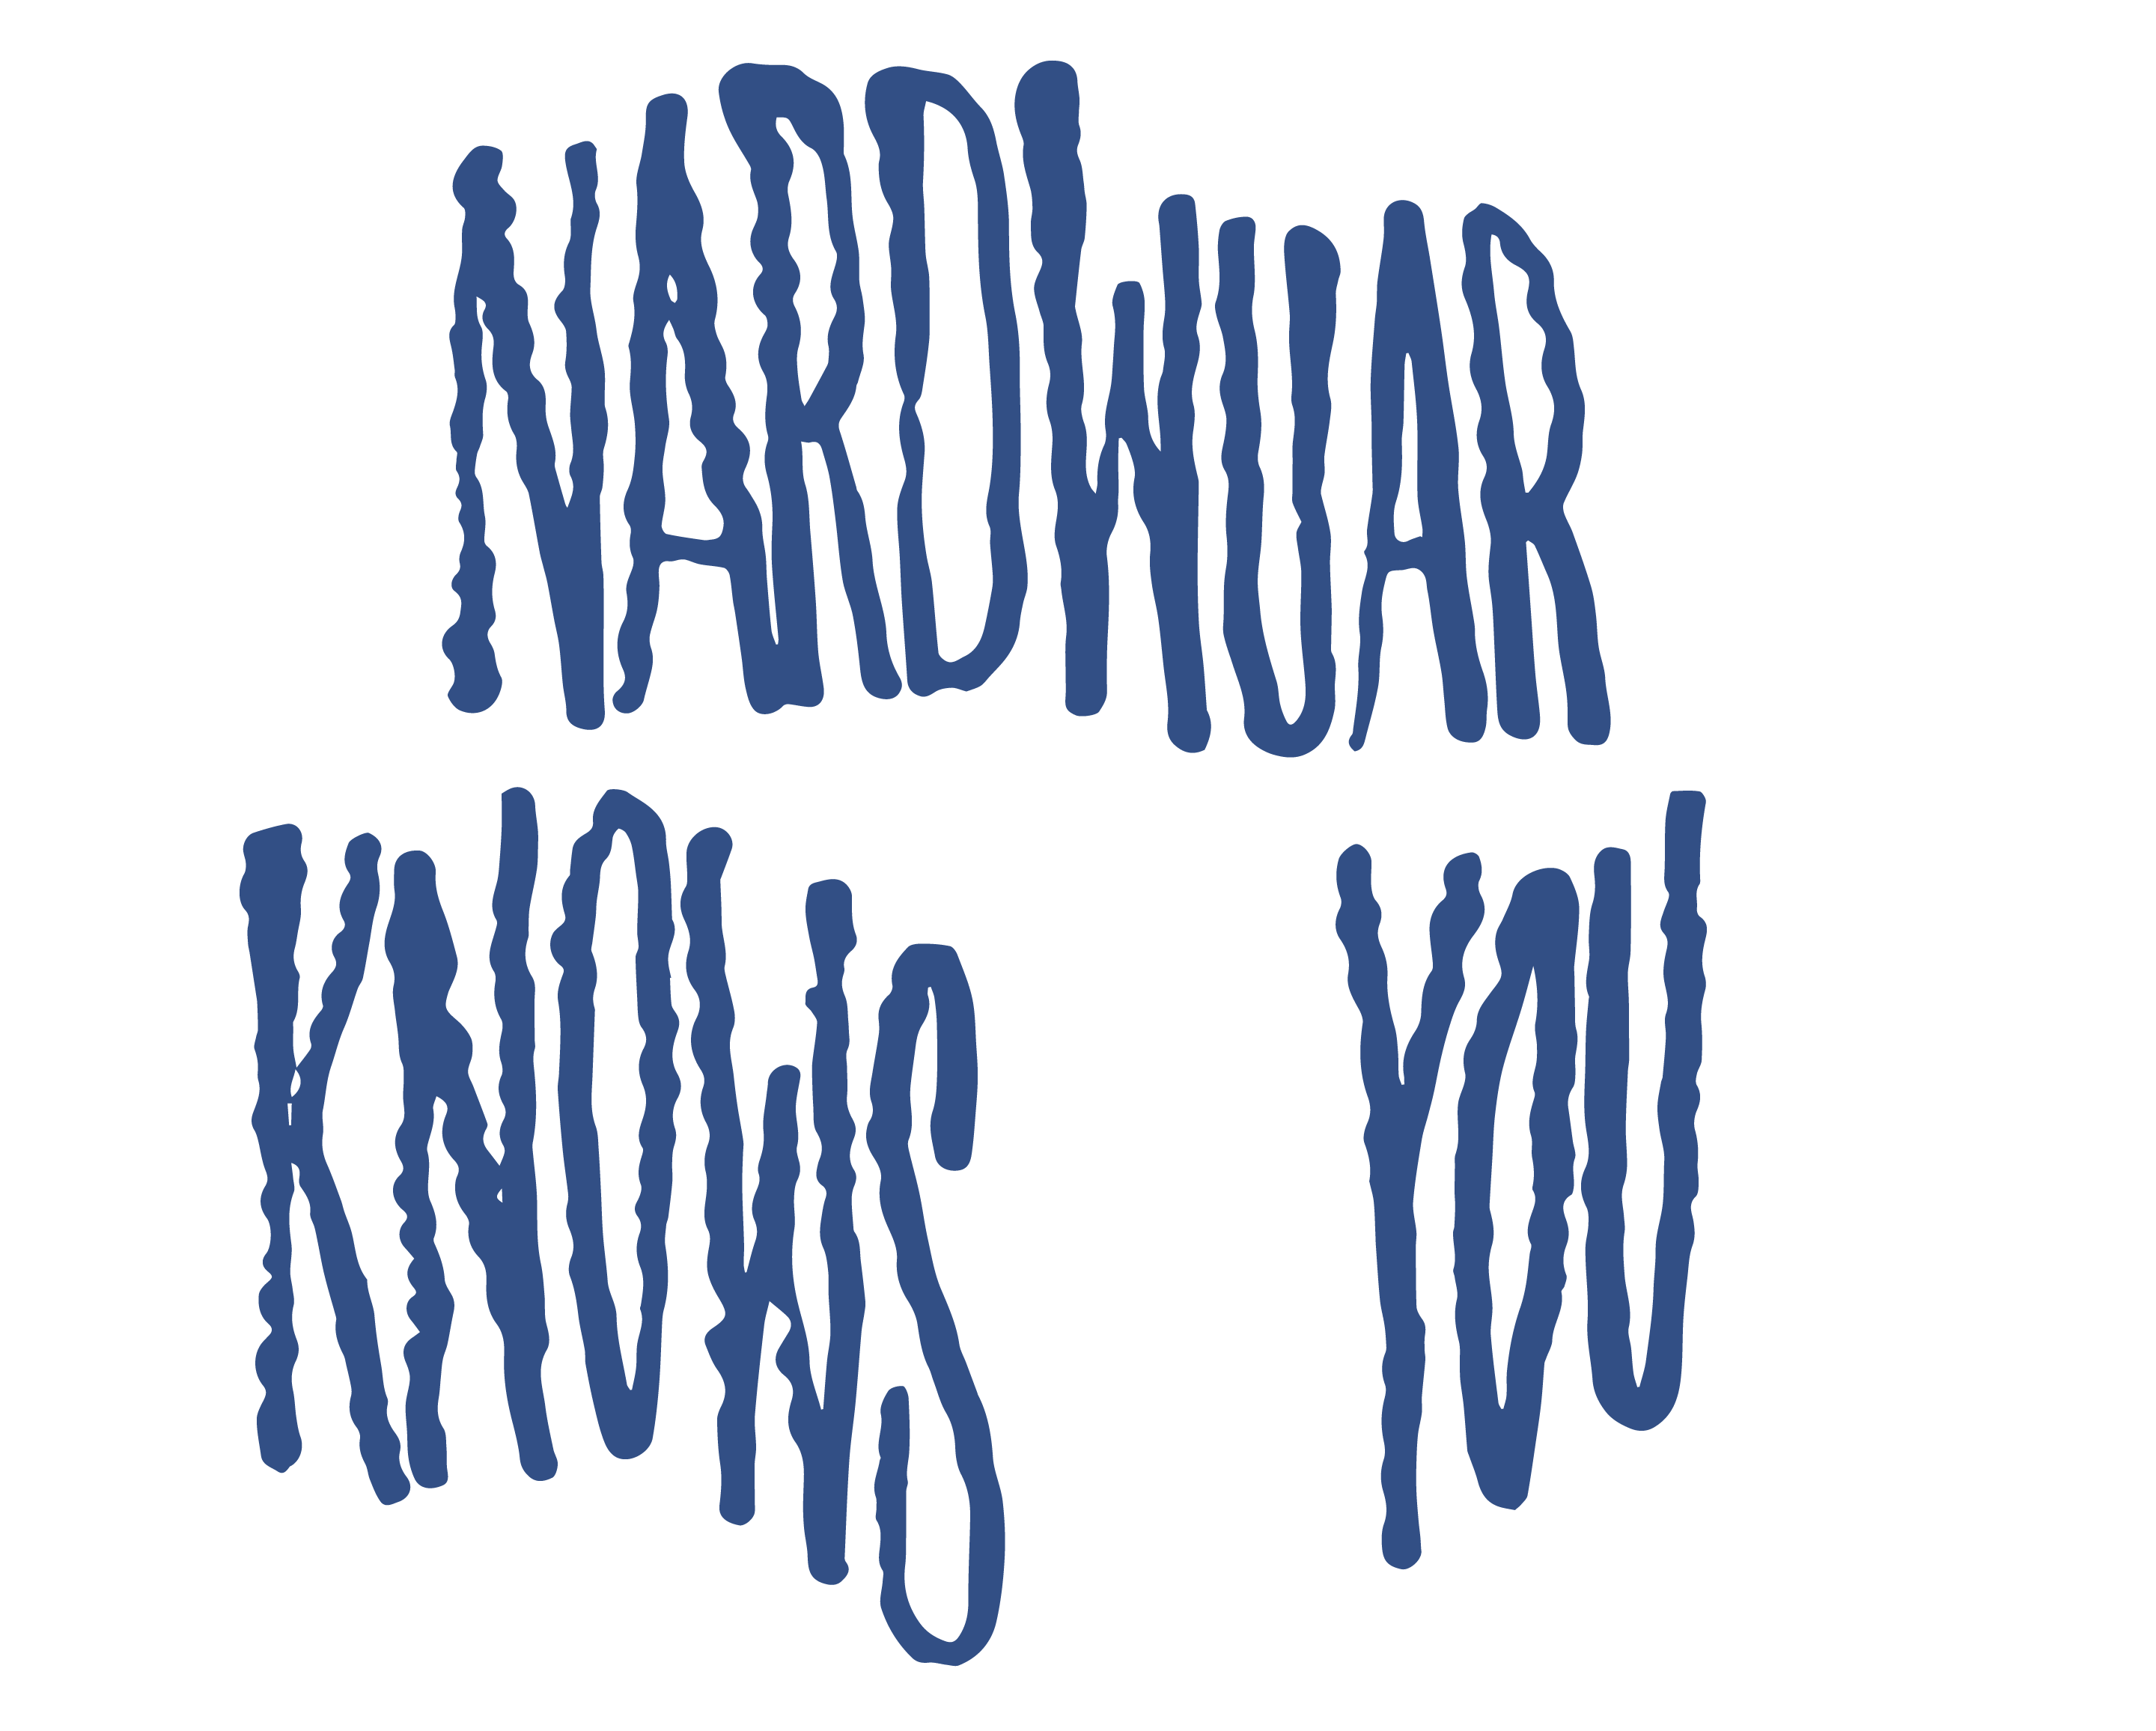 Nardwuar Knows You